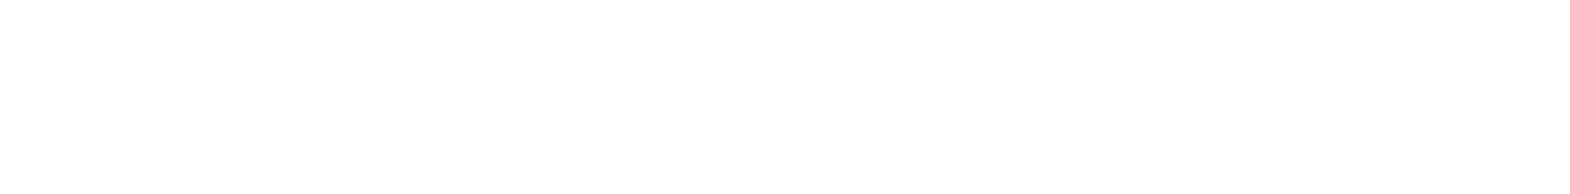 Diploma plc Logo groß für dunkle Hintergründe (transparentes PNG)